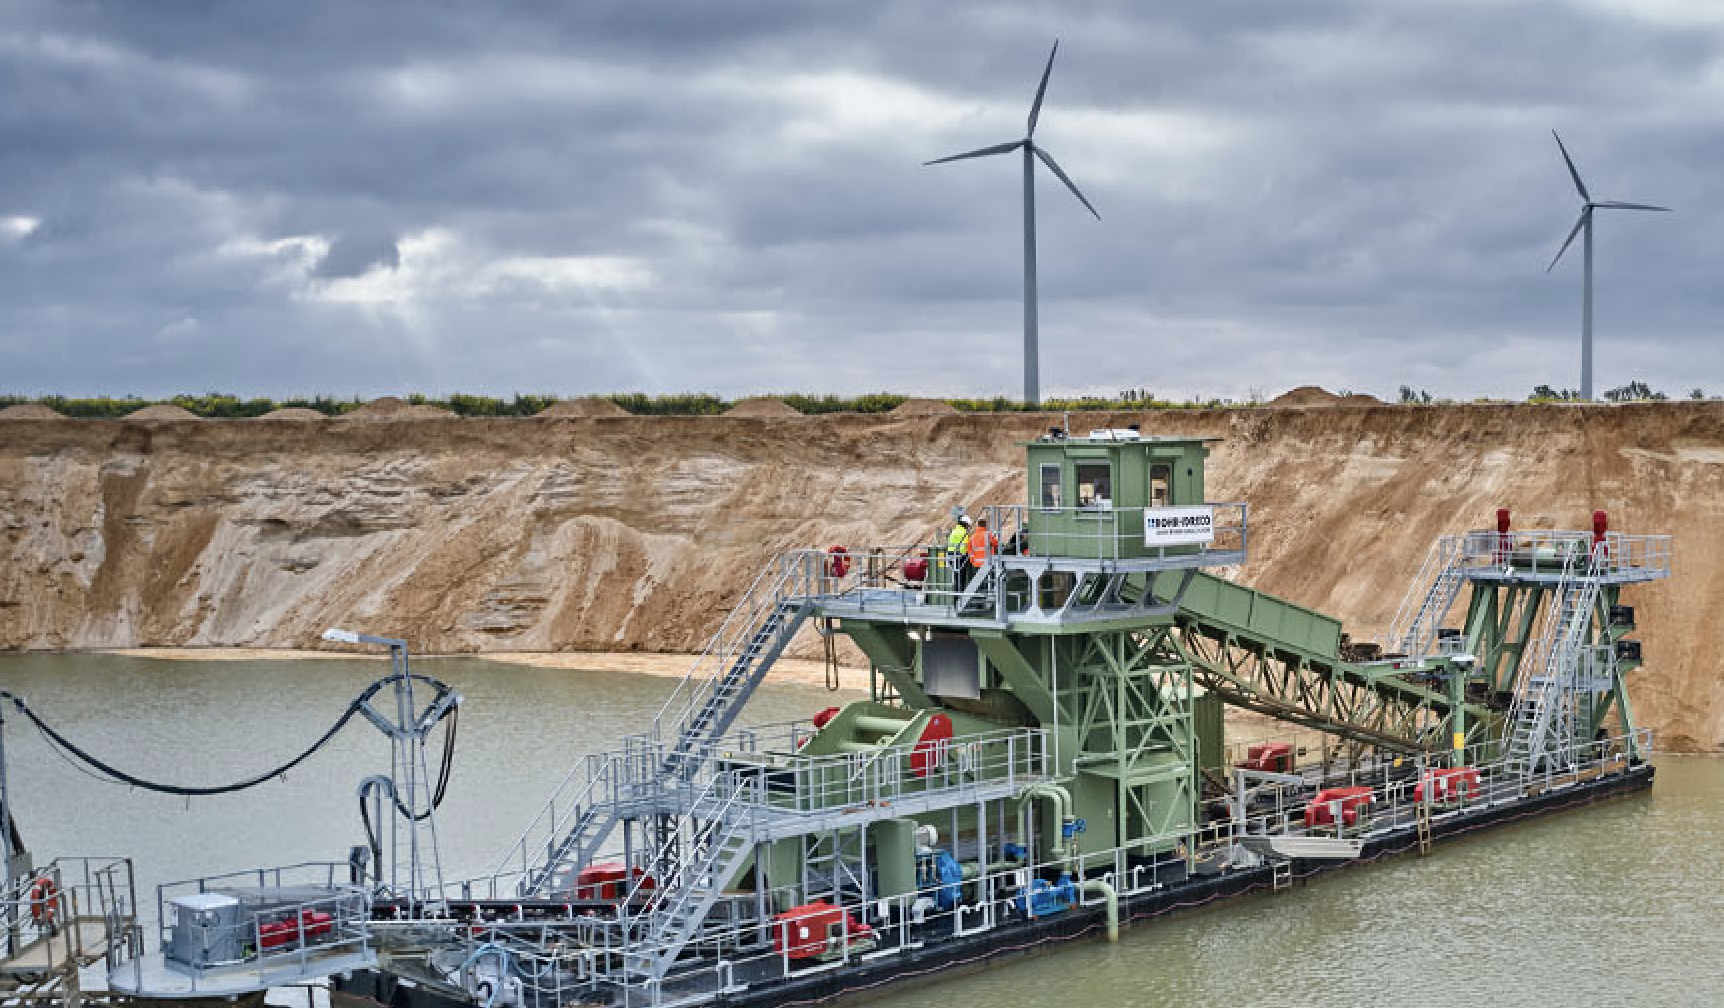 photo of green dredge mine with wind turbines